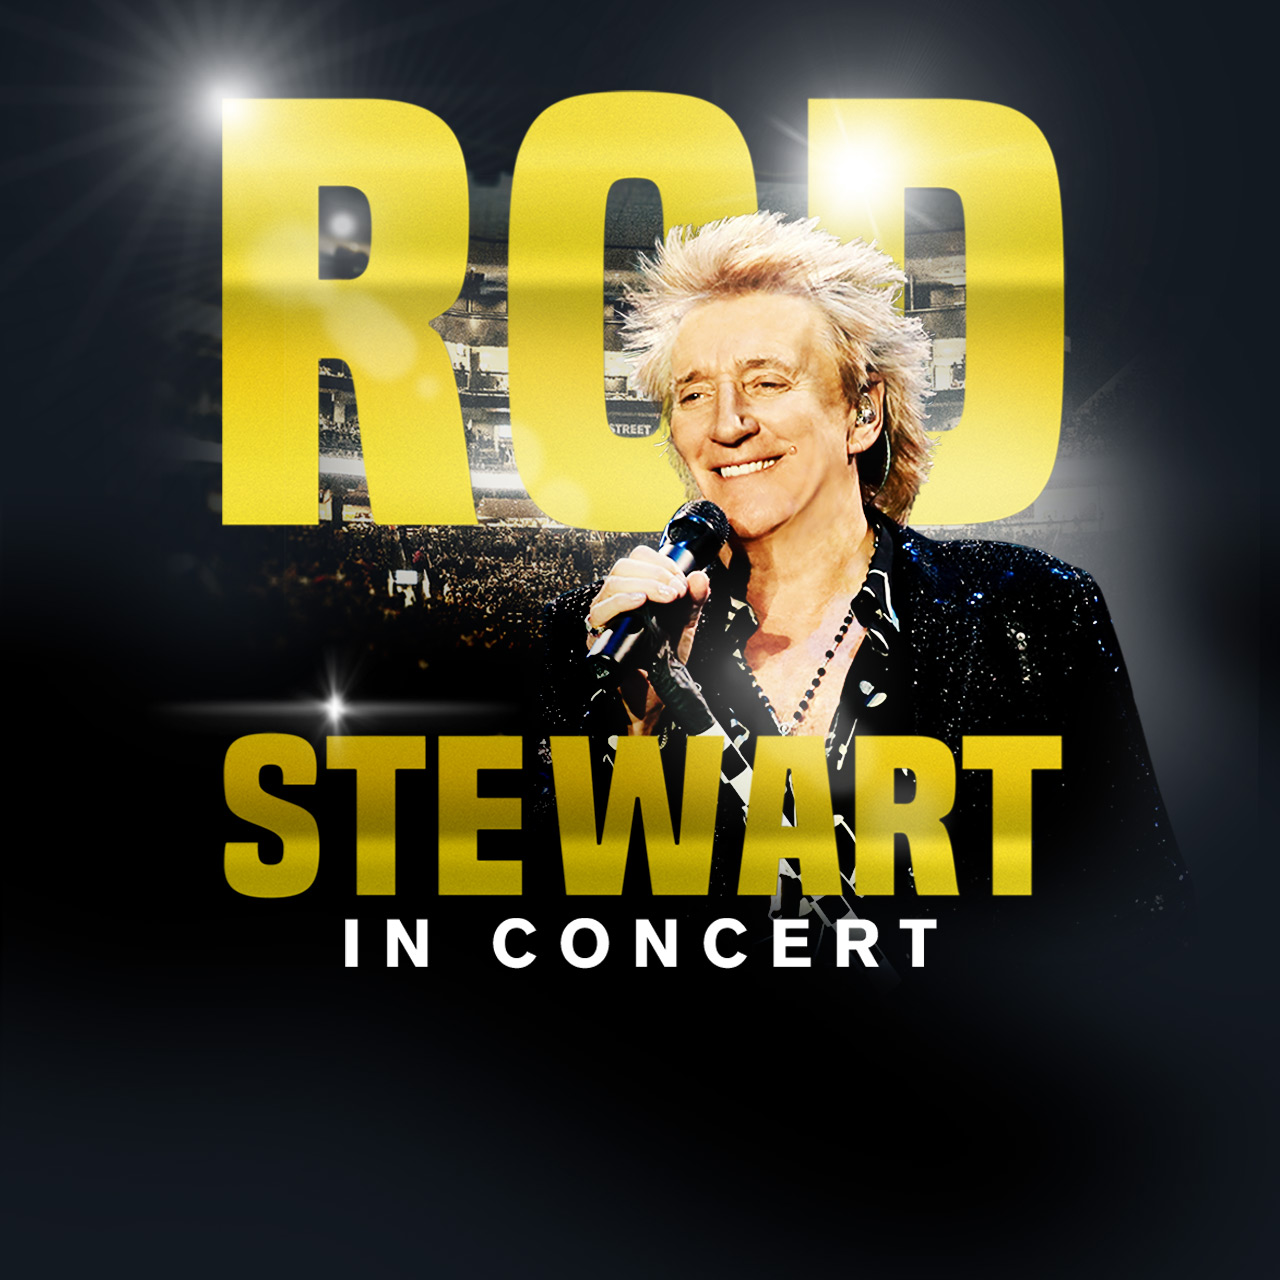 Rod Stewart - Biography